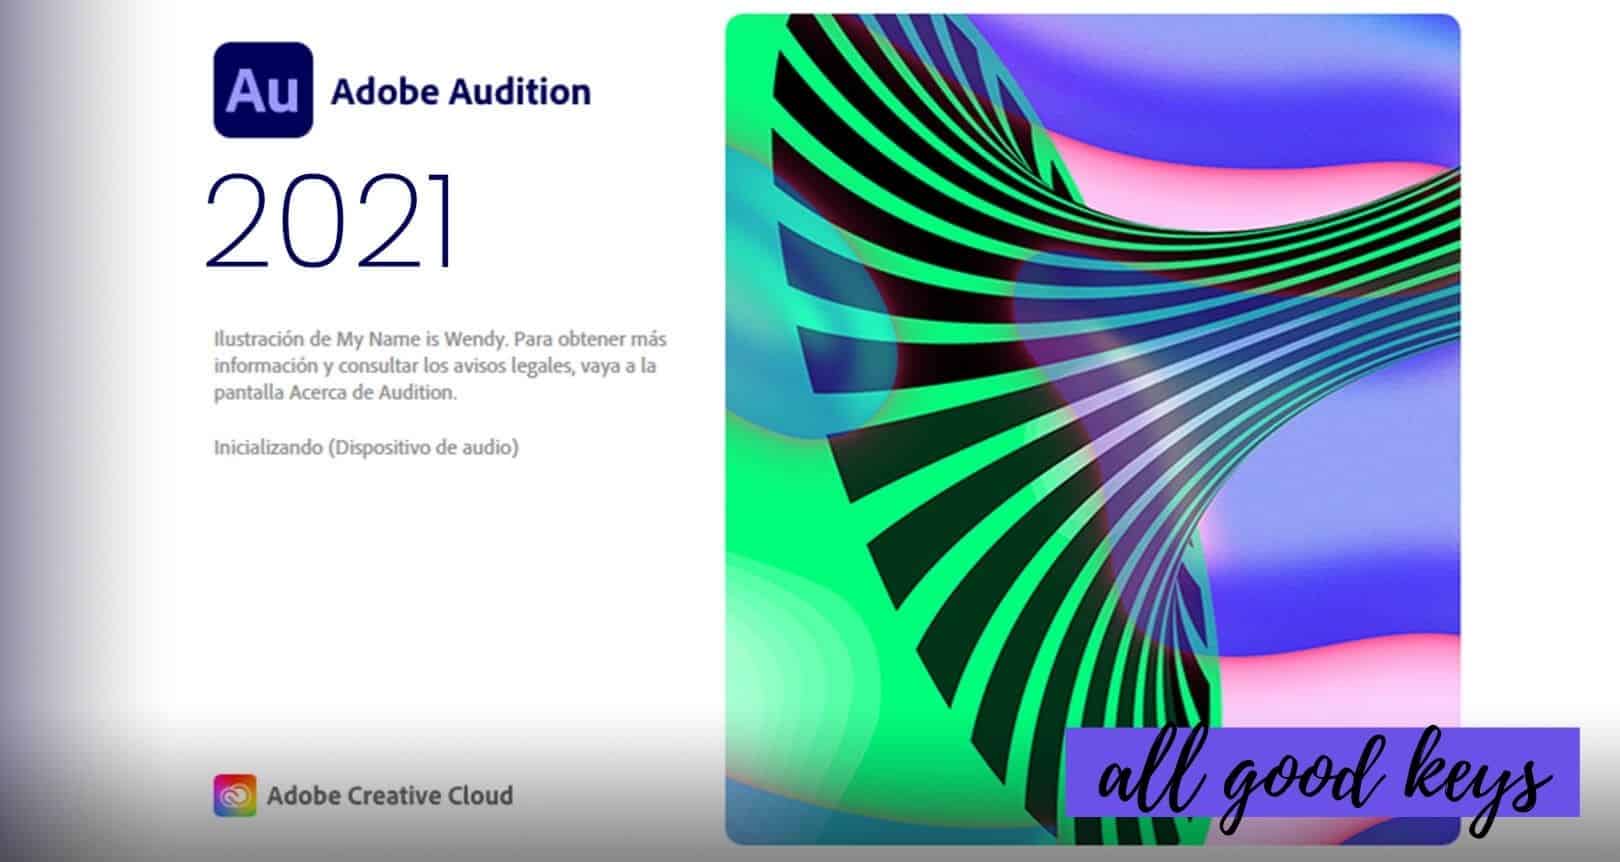 adobe audition cc audio production course basics to expert